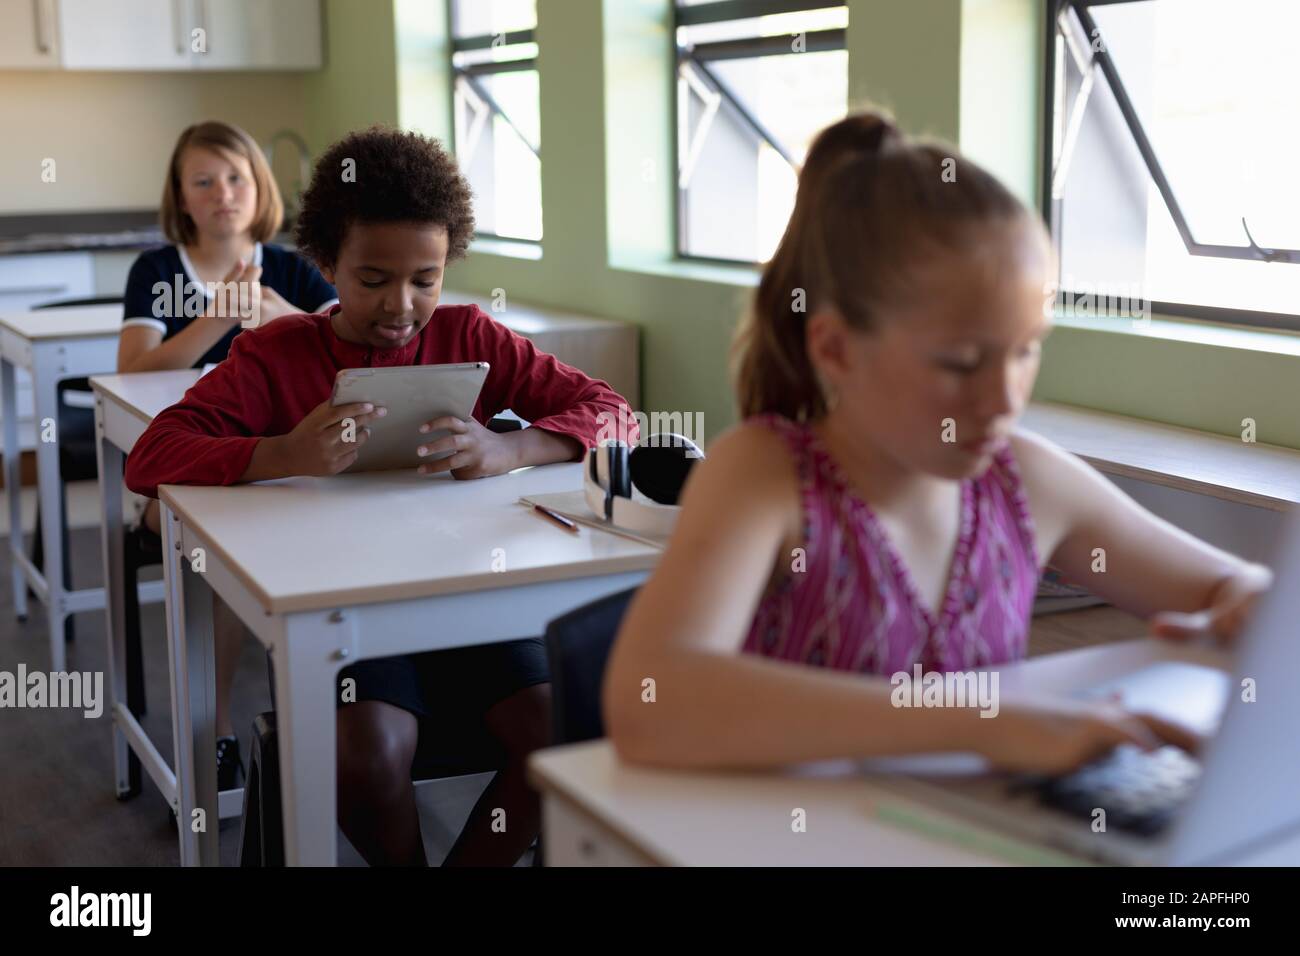 Group schoolchildren sitting at desks using personal computers Stock Photo